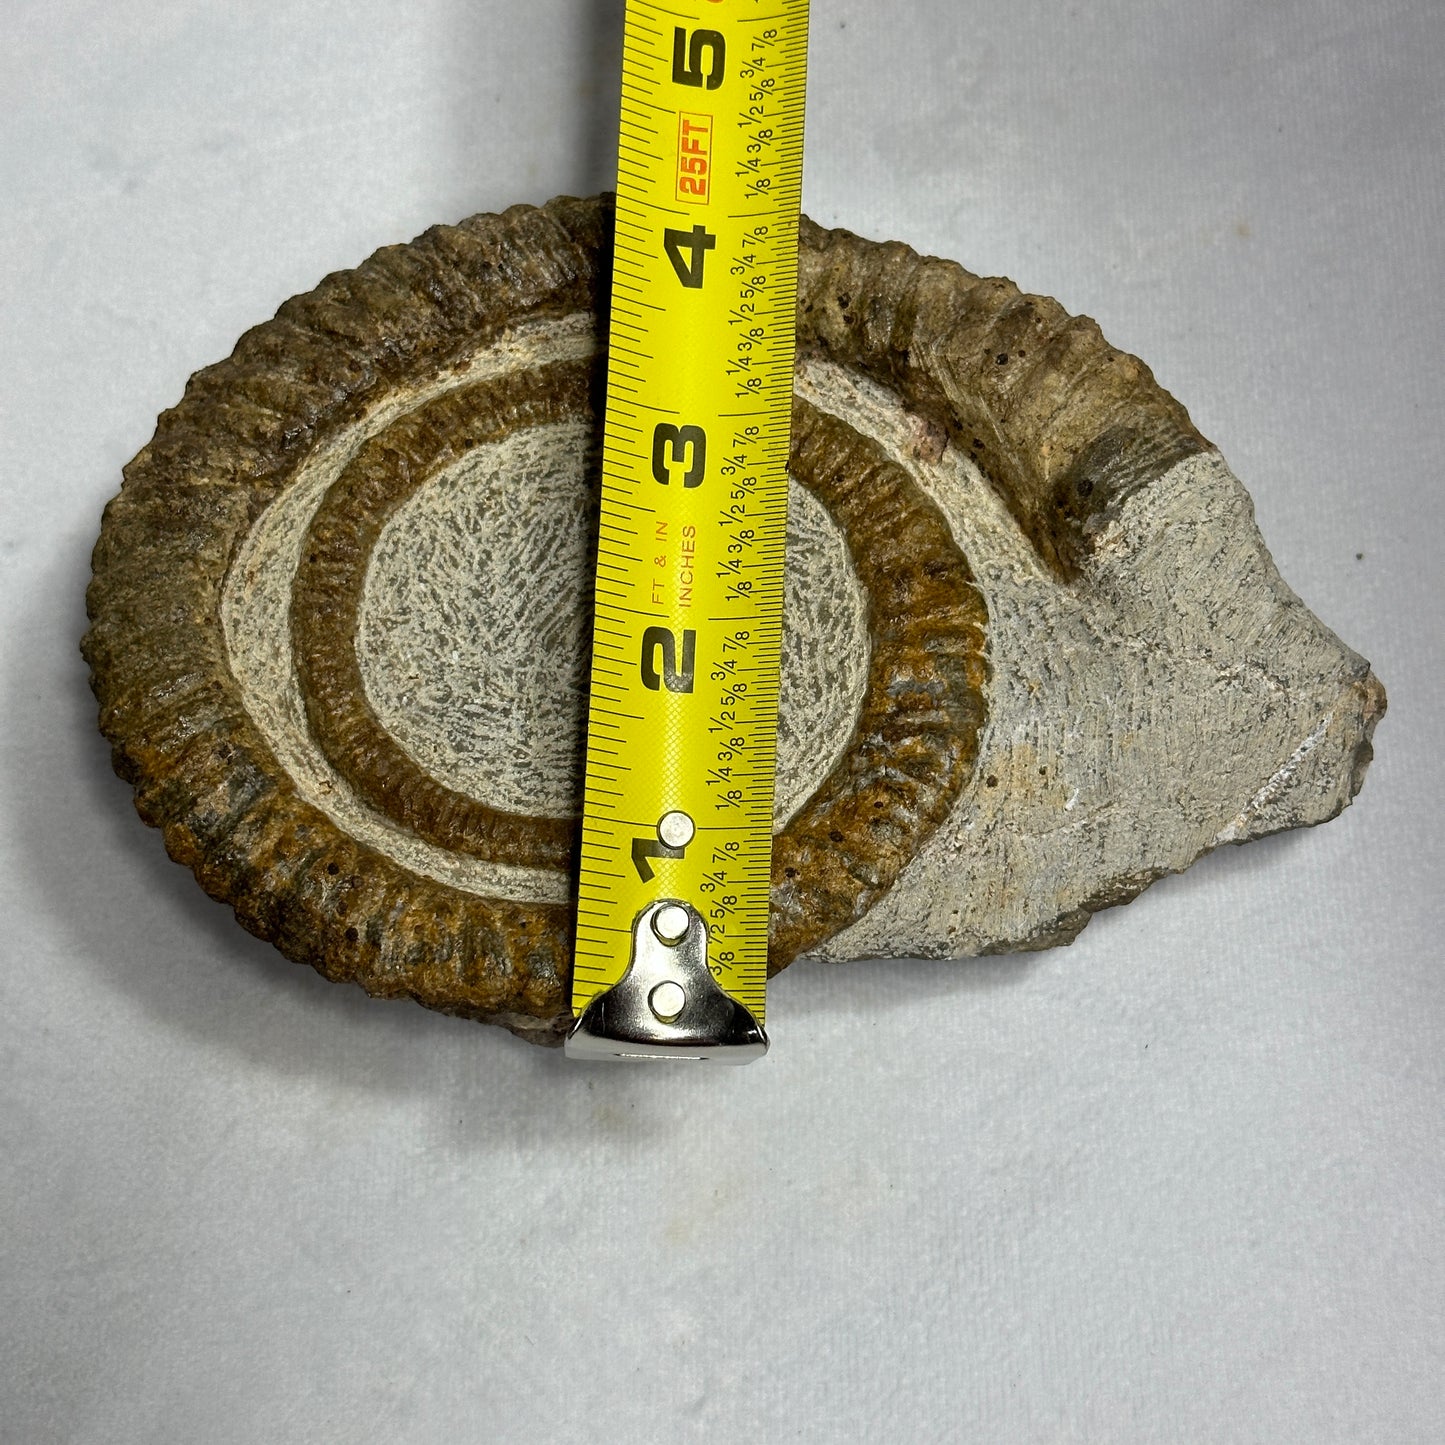 Stunning Display Piece - Anetoceras Heteromorph Ammonite